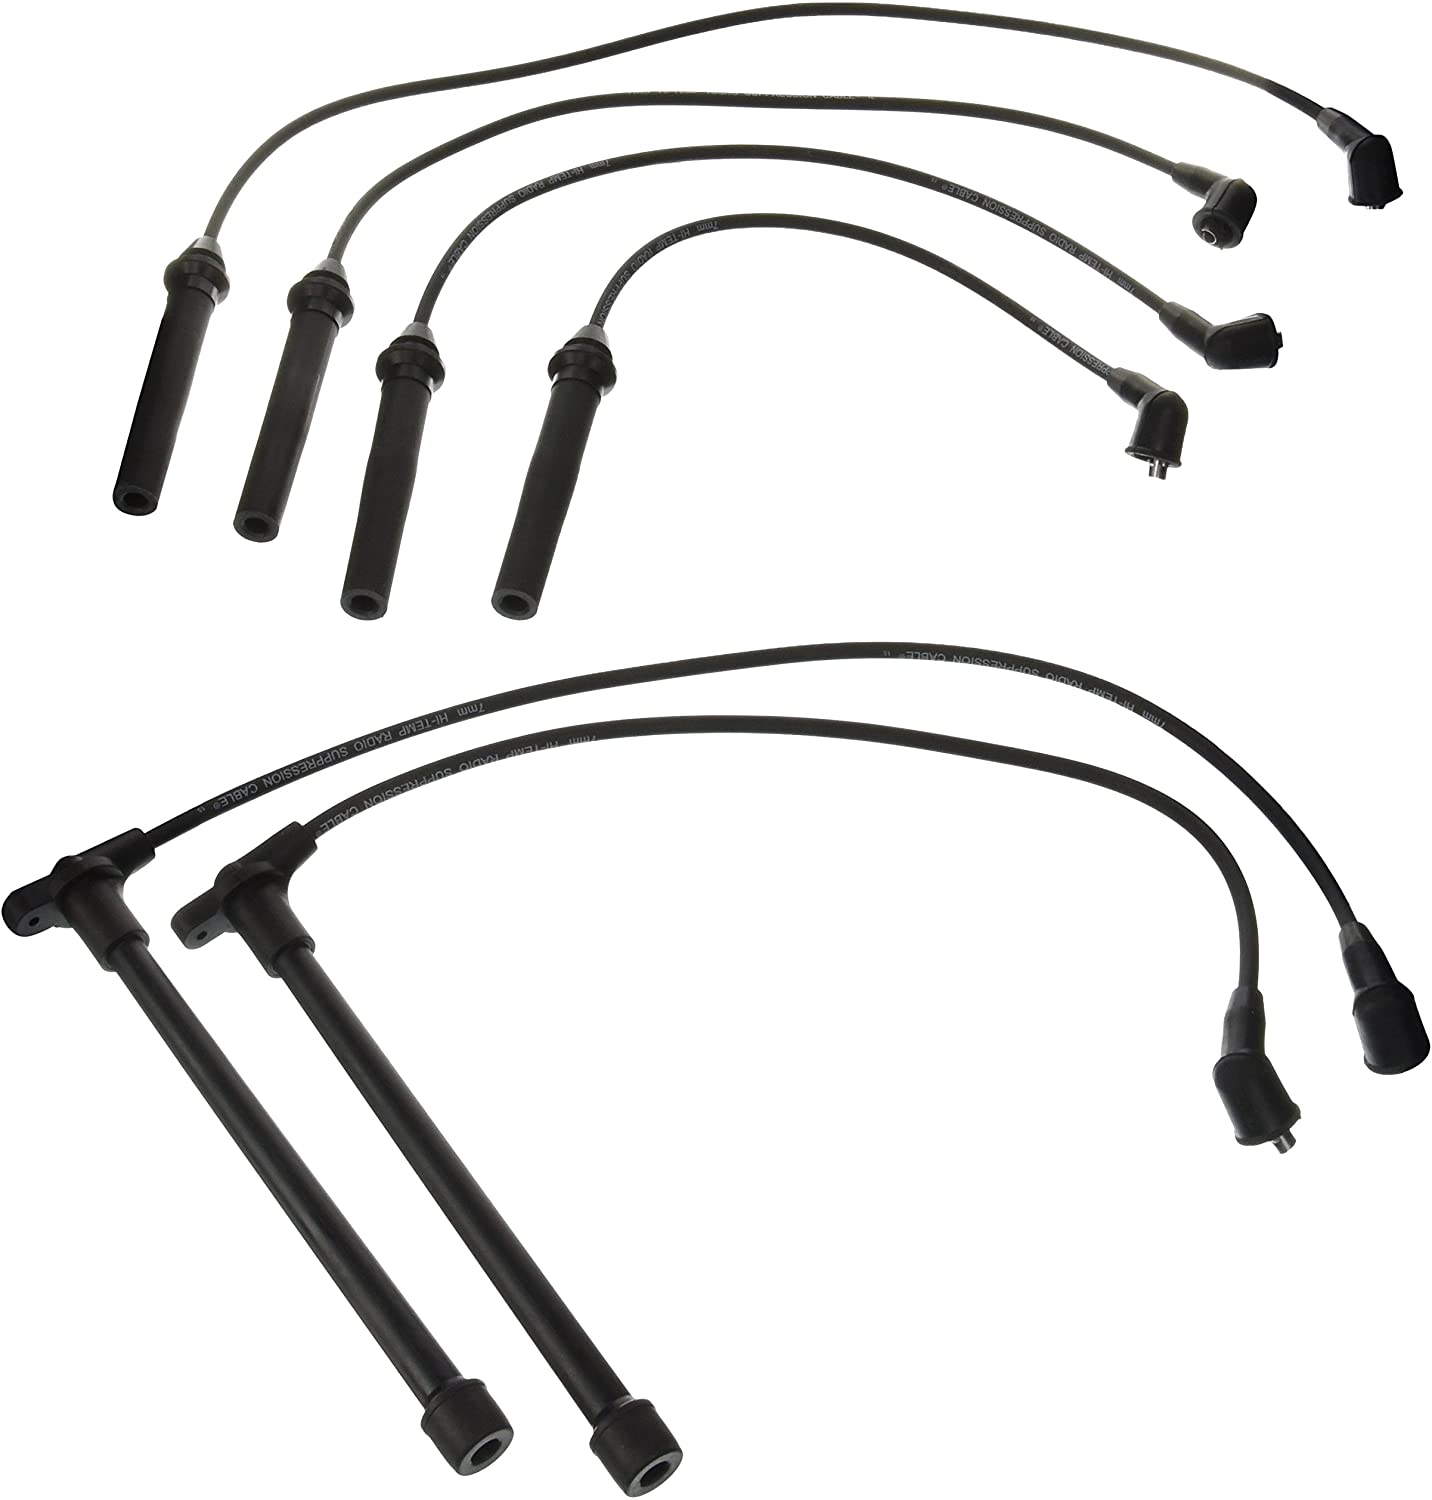 Federal Parts 6076 Spark Plug Wire Set